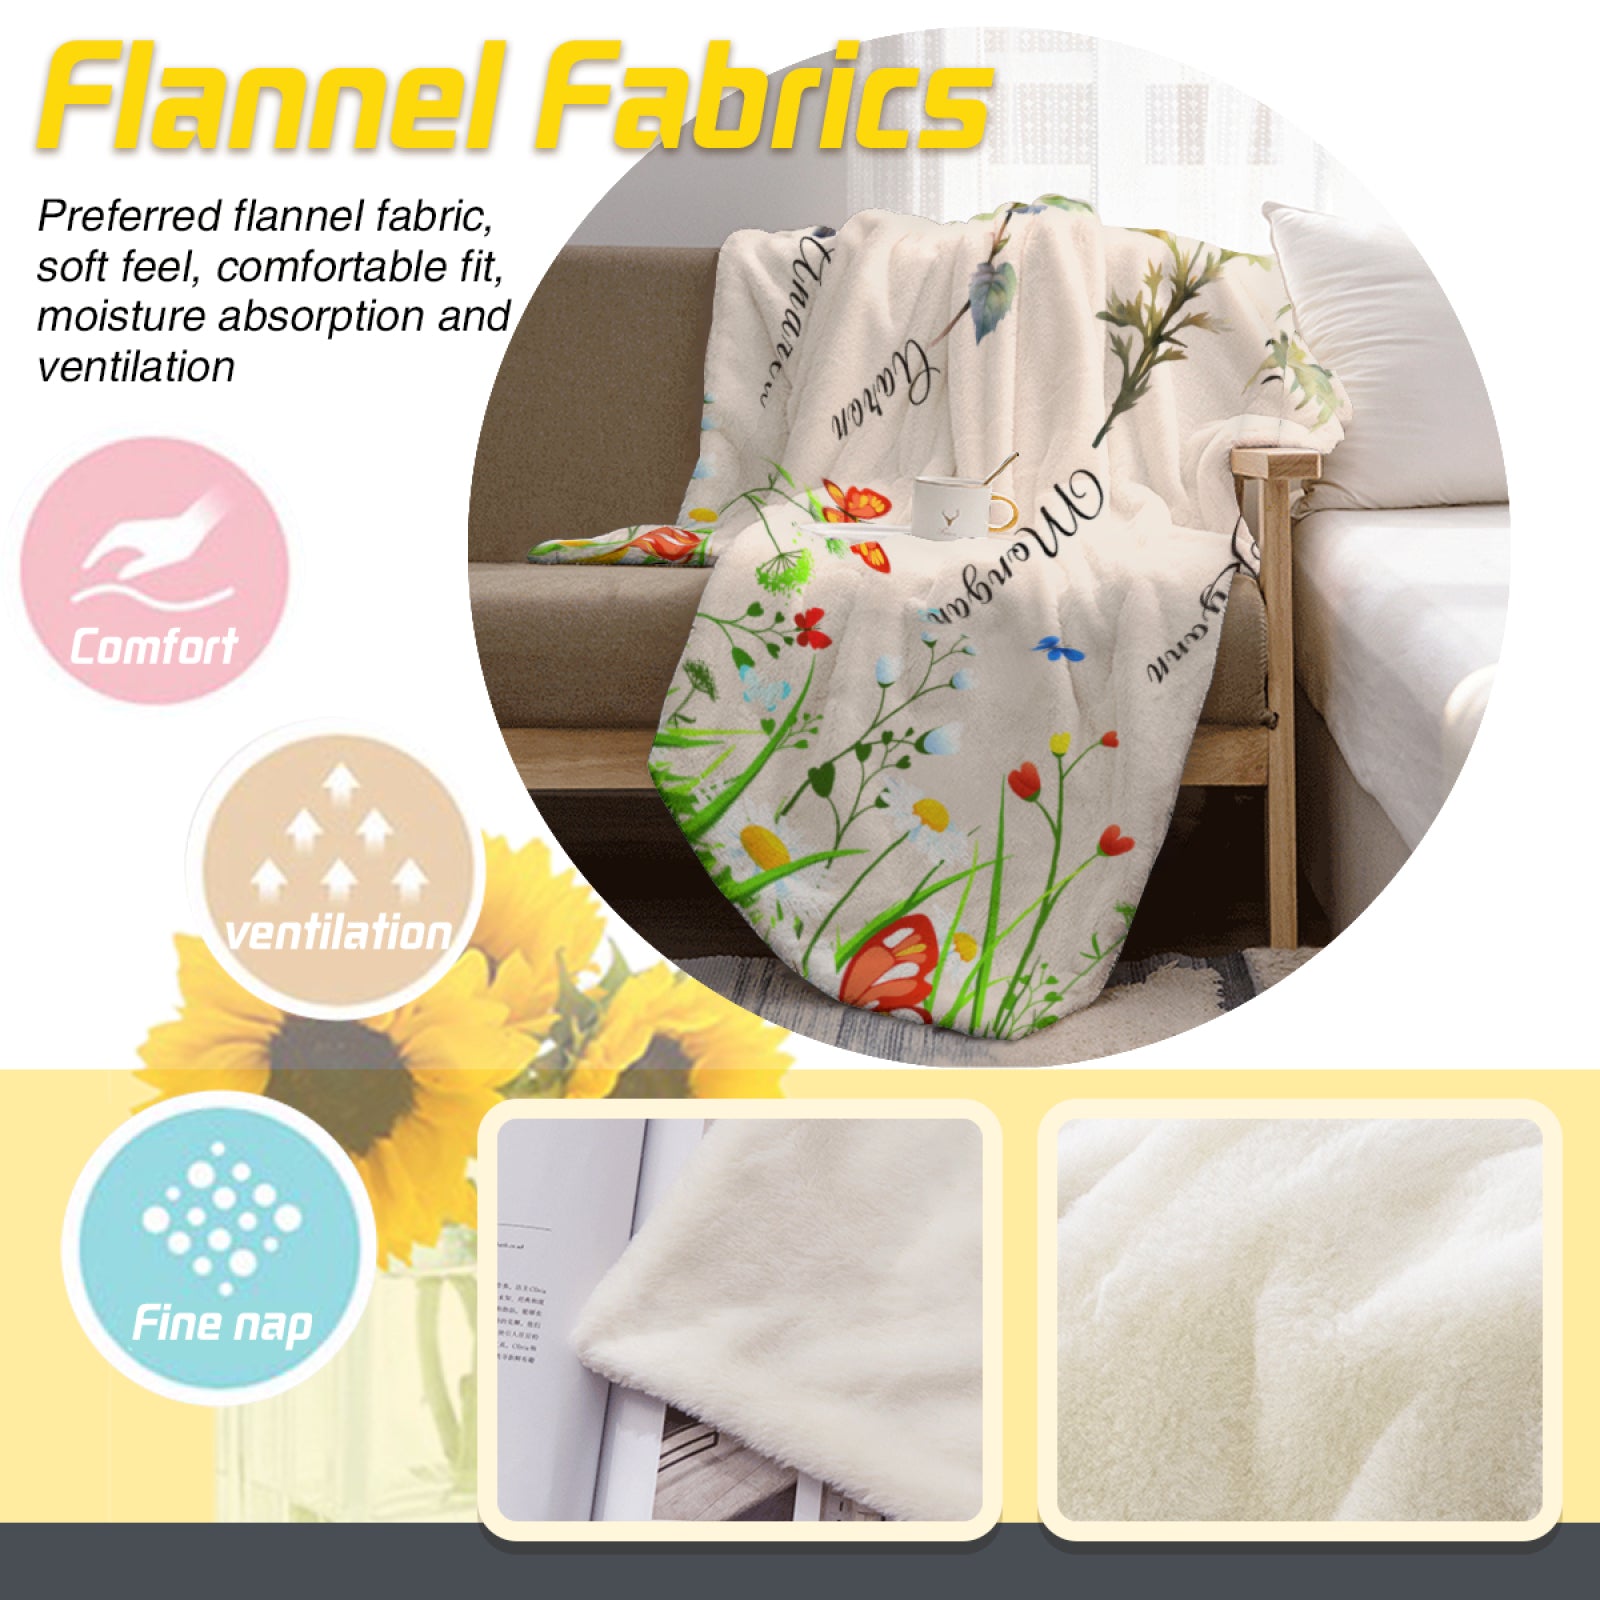 Grandma's Garden Blanket, Custom Birth Flower Blanket with Name Grandma Gifts From Grandkid Personalized Gifts for NaNa